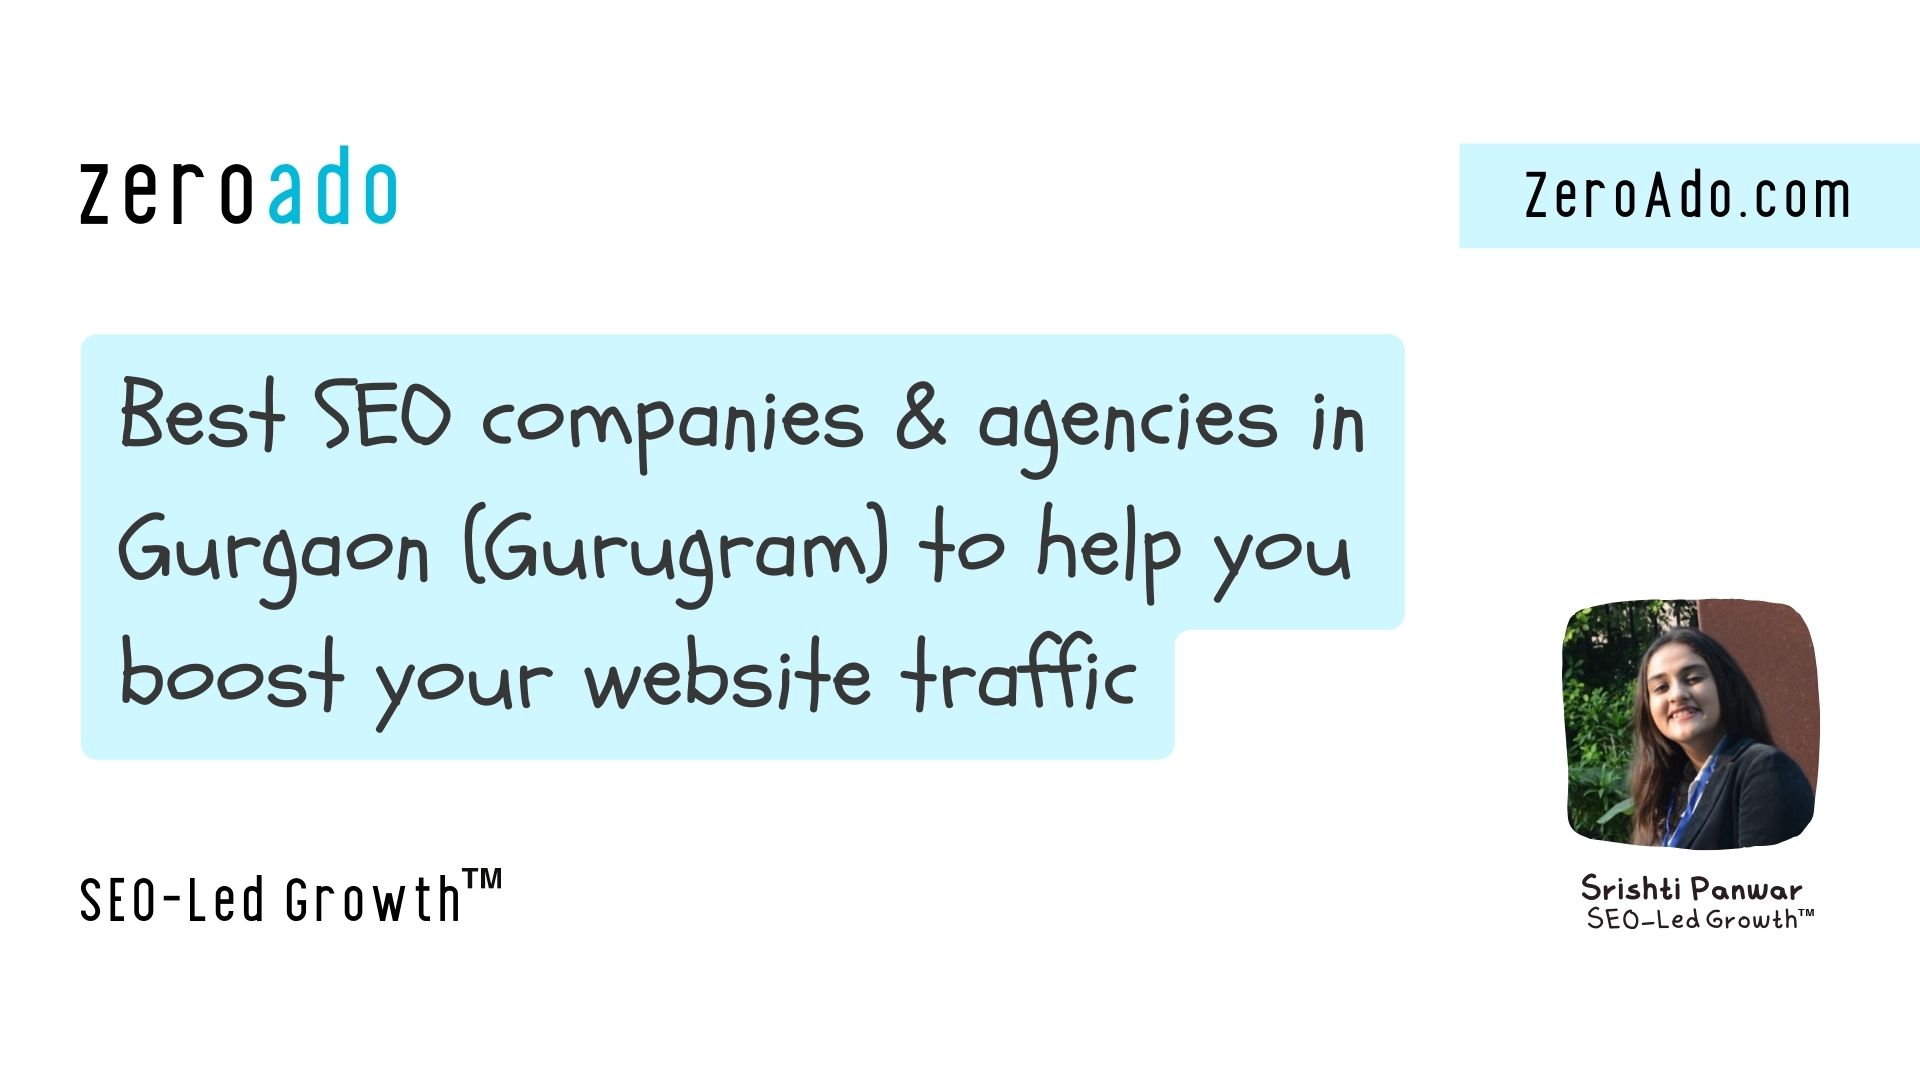 Best SEO companies & agencies in Gurgaon (Gurugram).